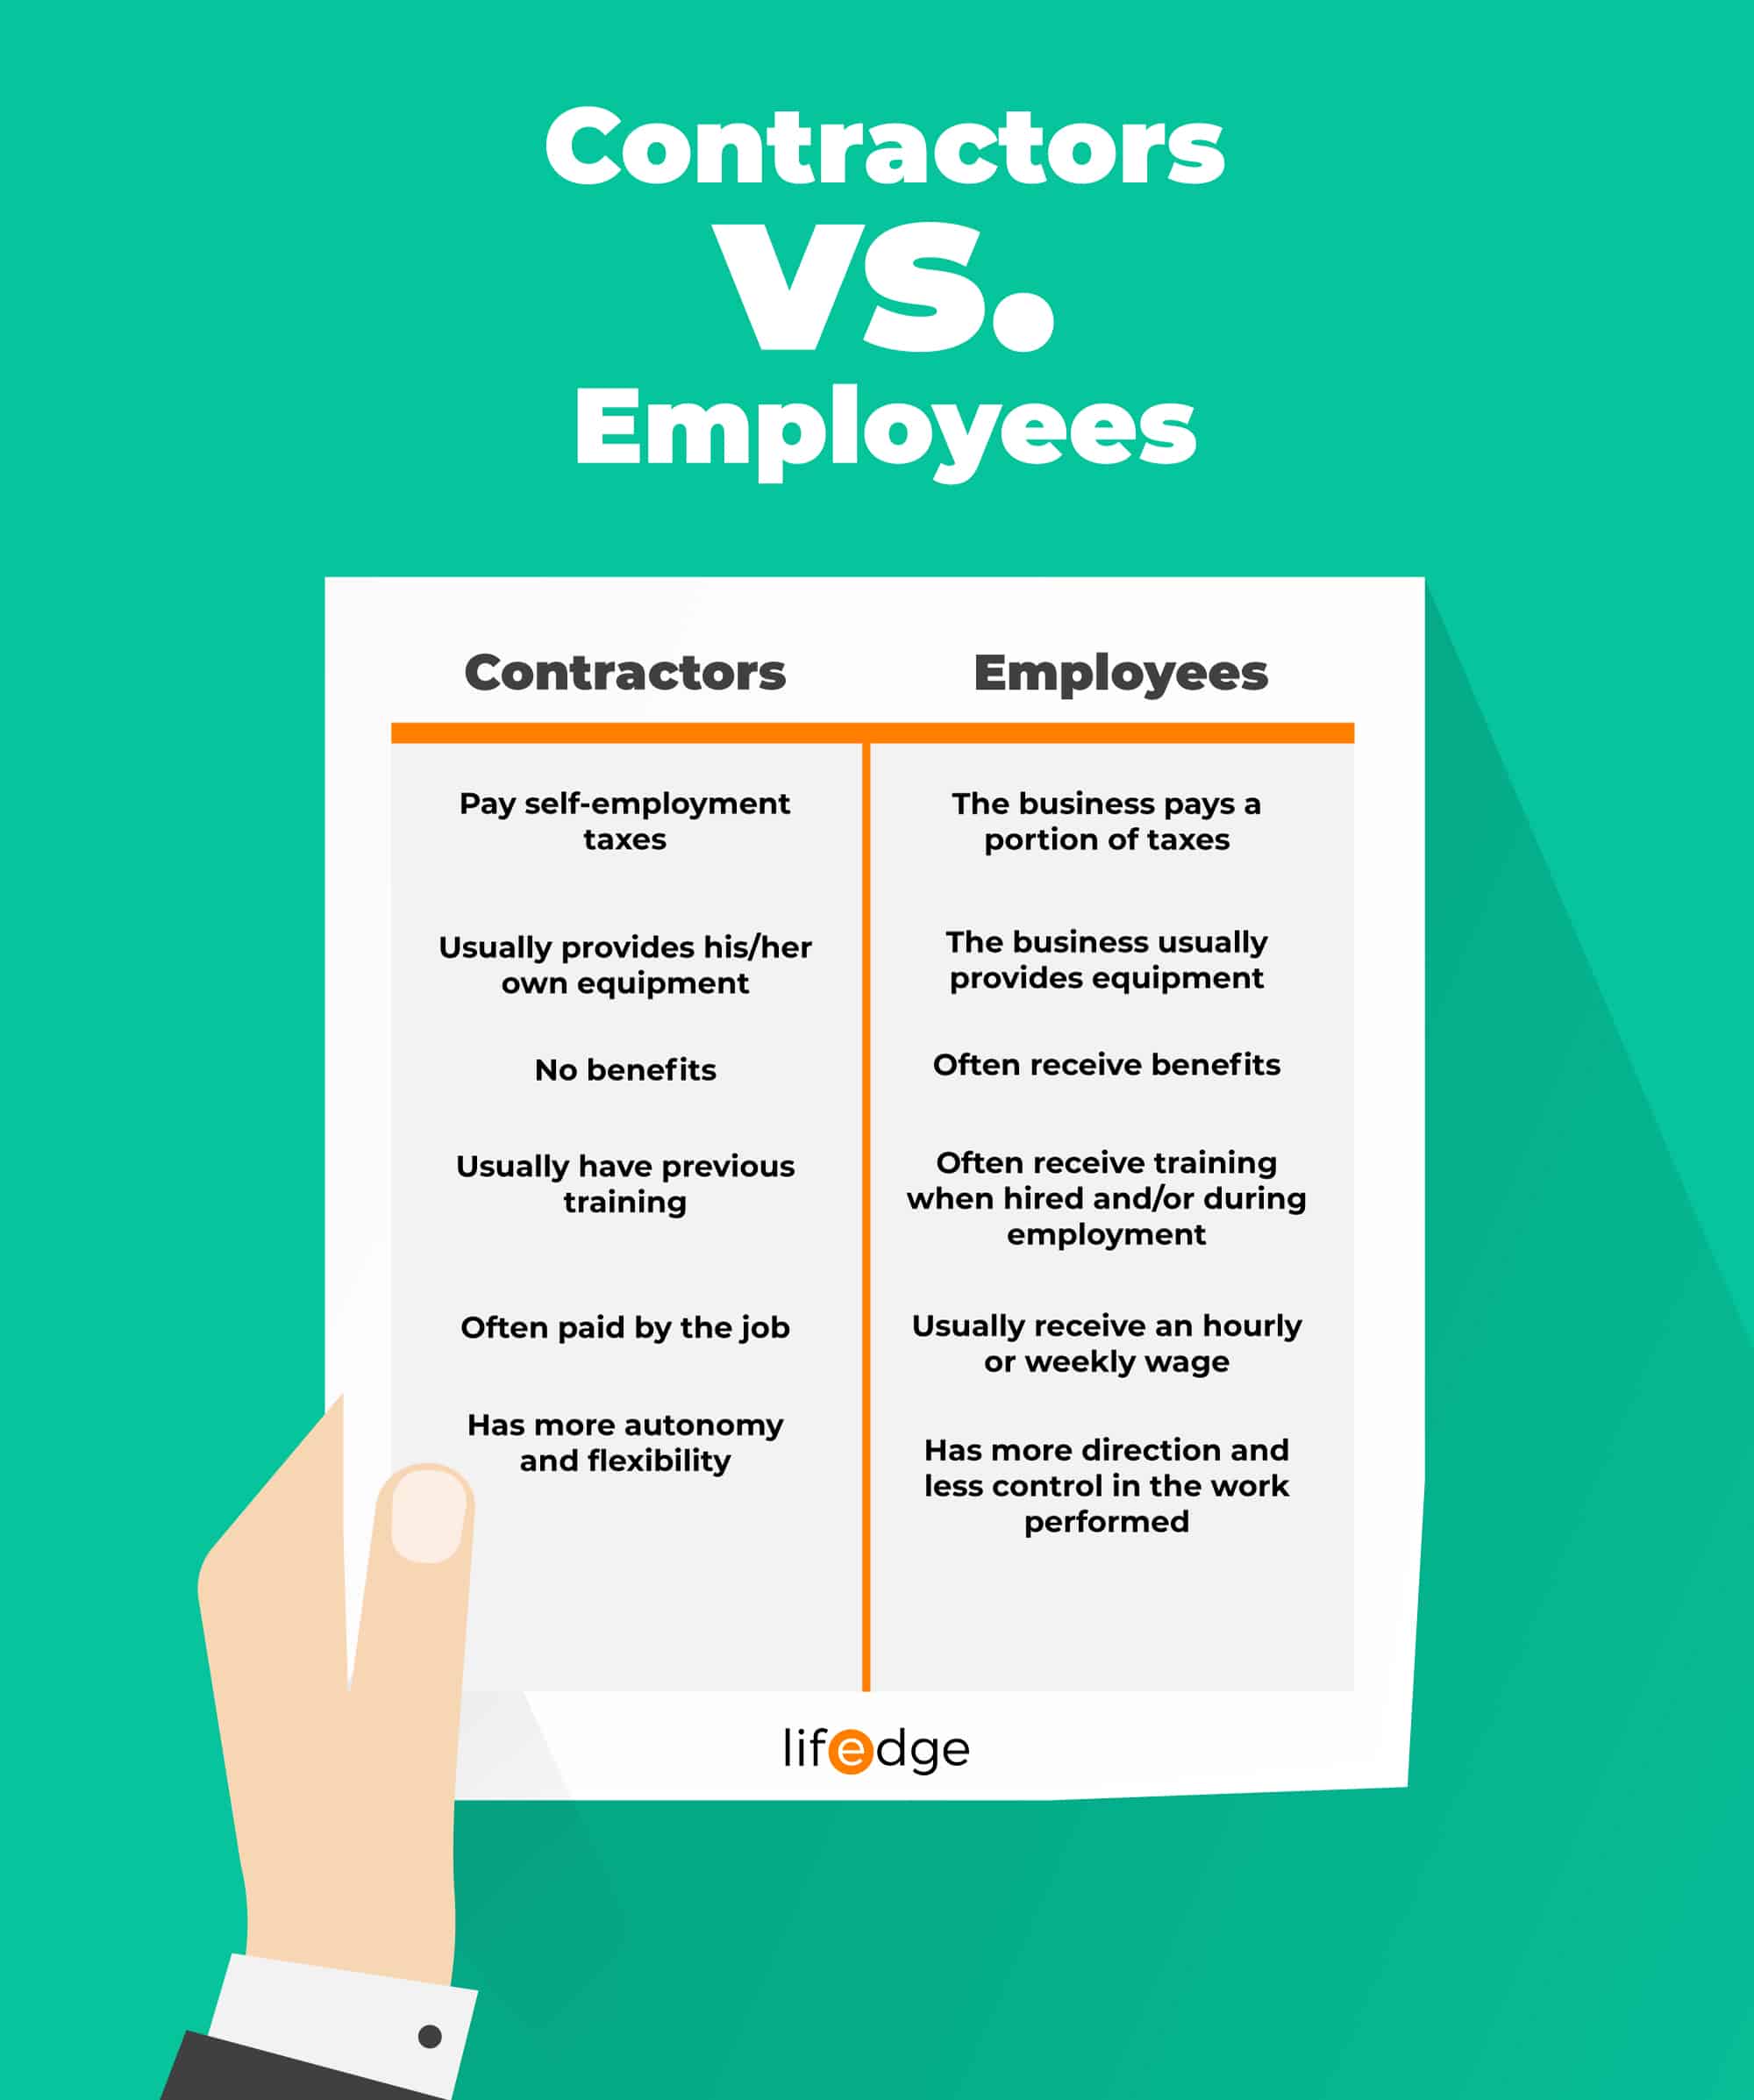 Contractors vs. Employees Lifedge